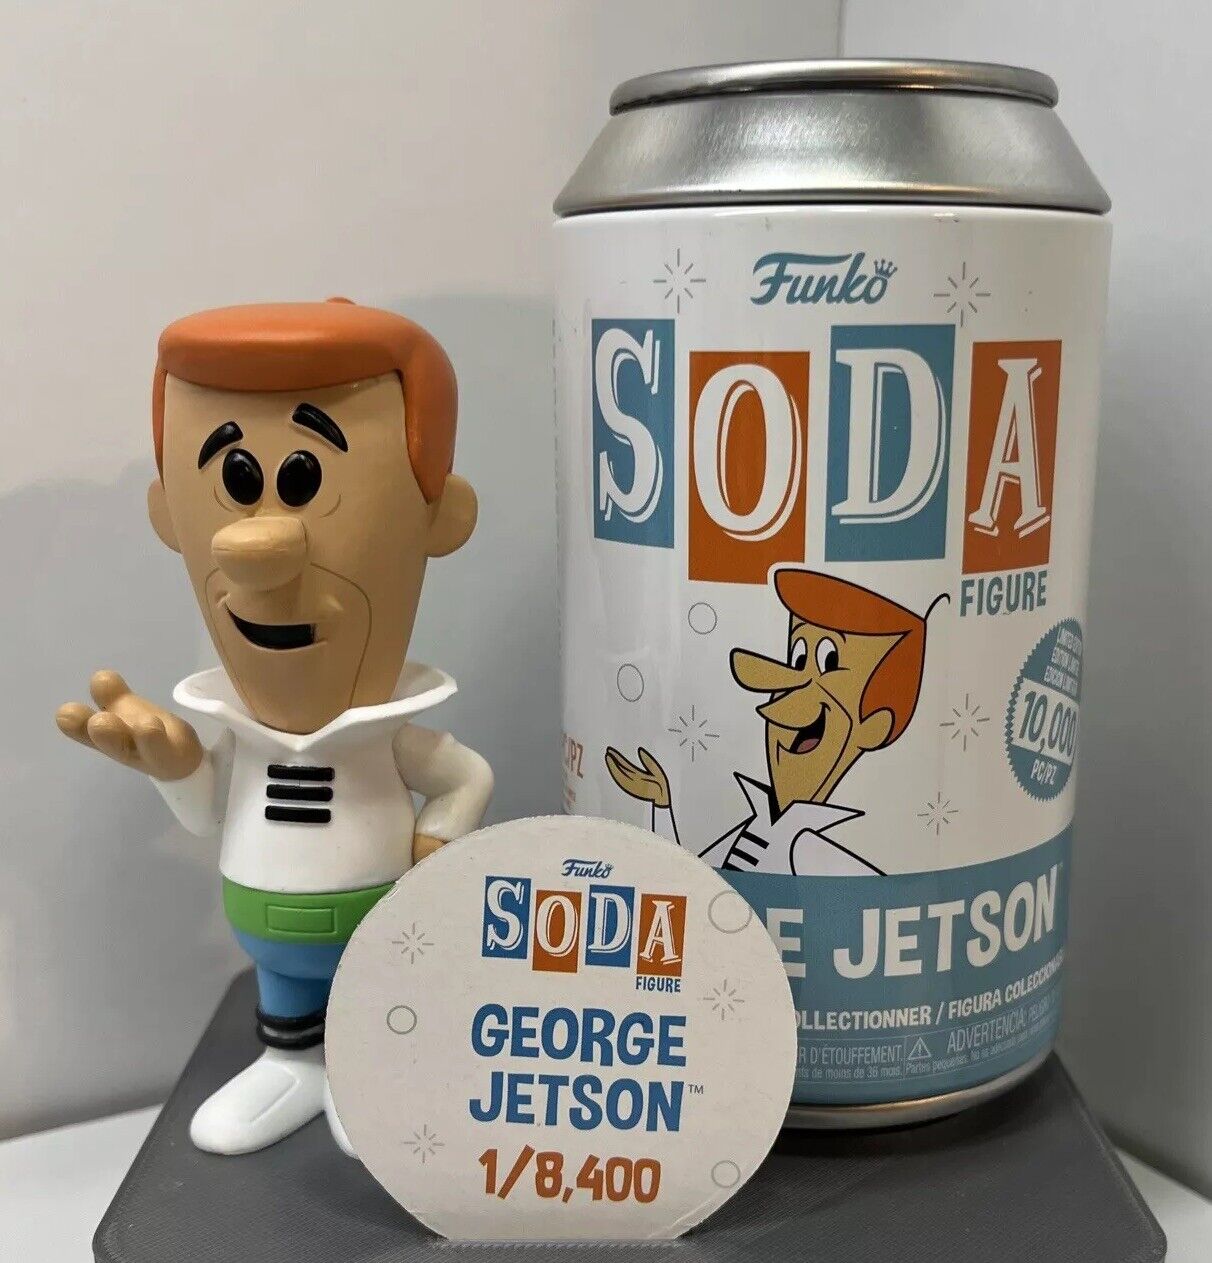 Funko Soda The Jetsons George Jetson Limited Figure Classic Cartoon Common